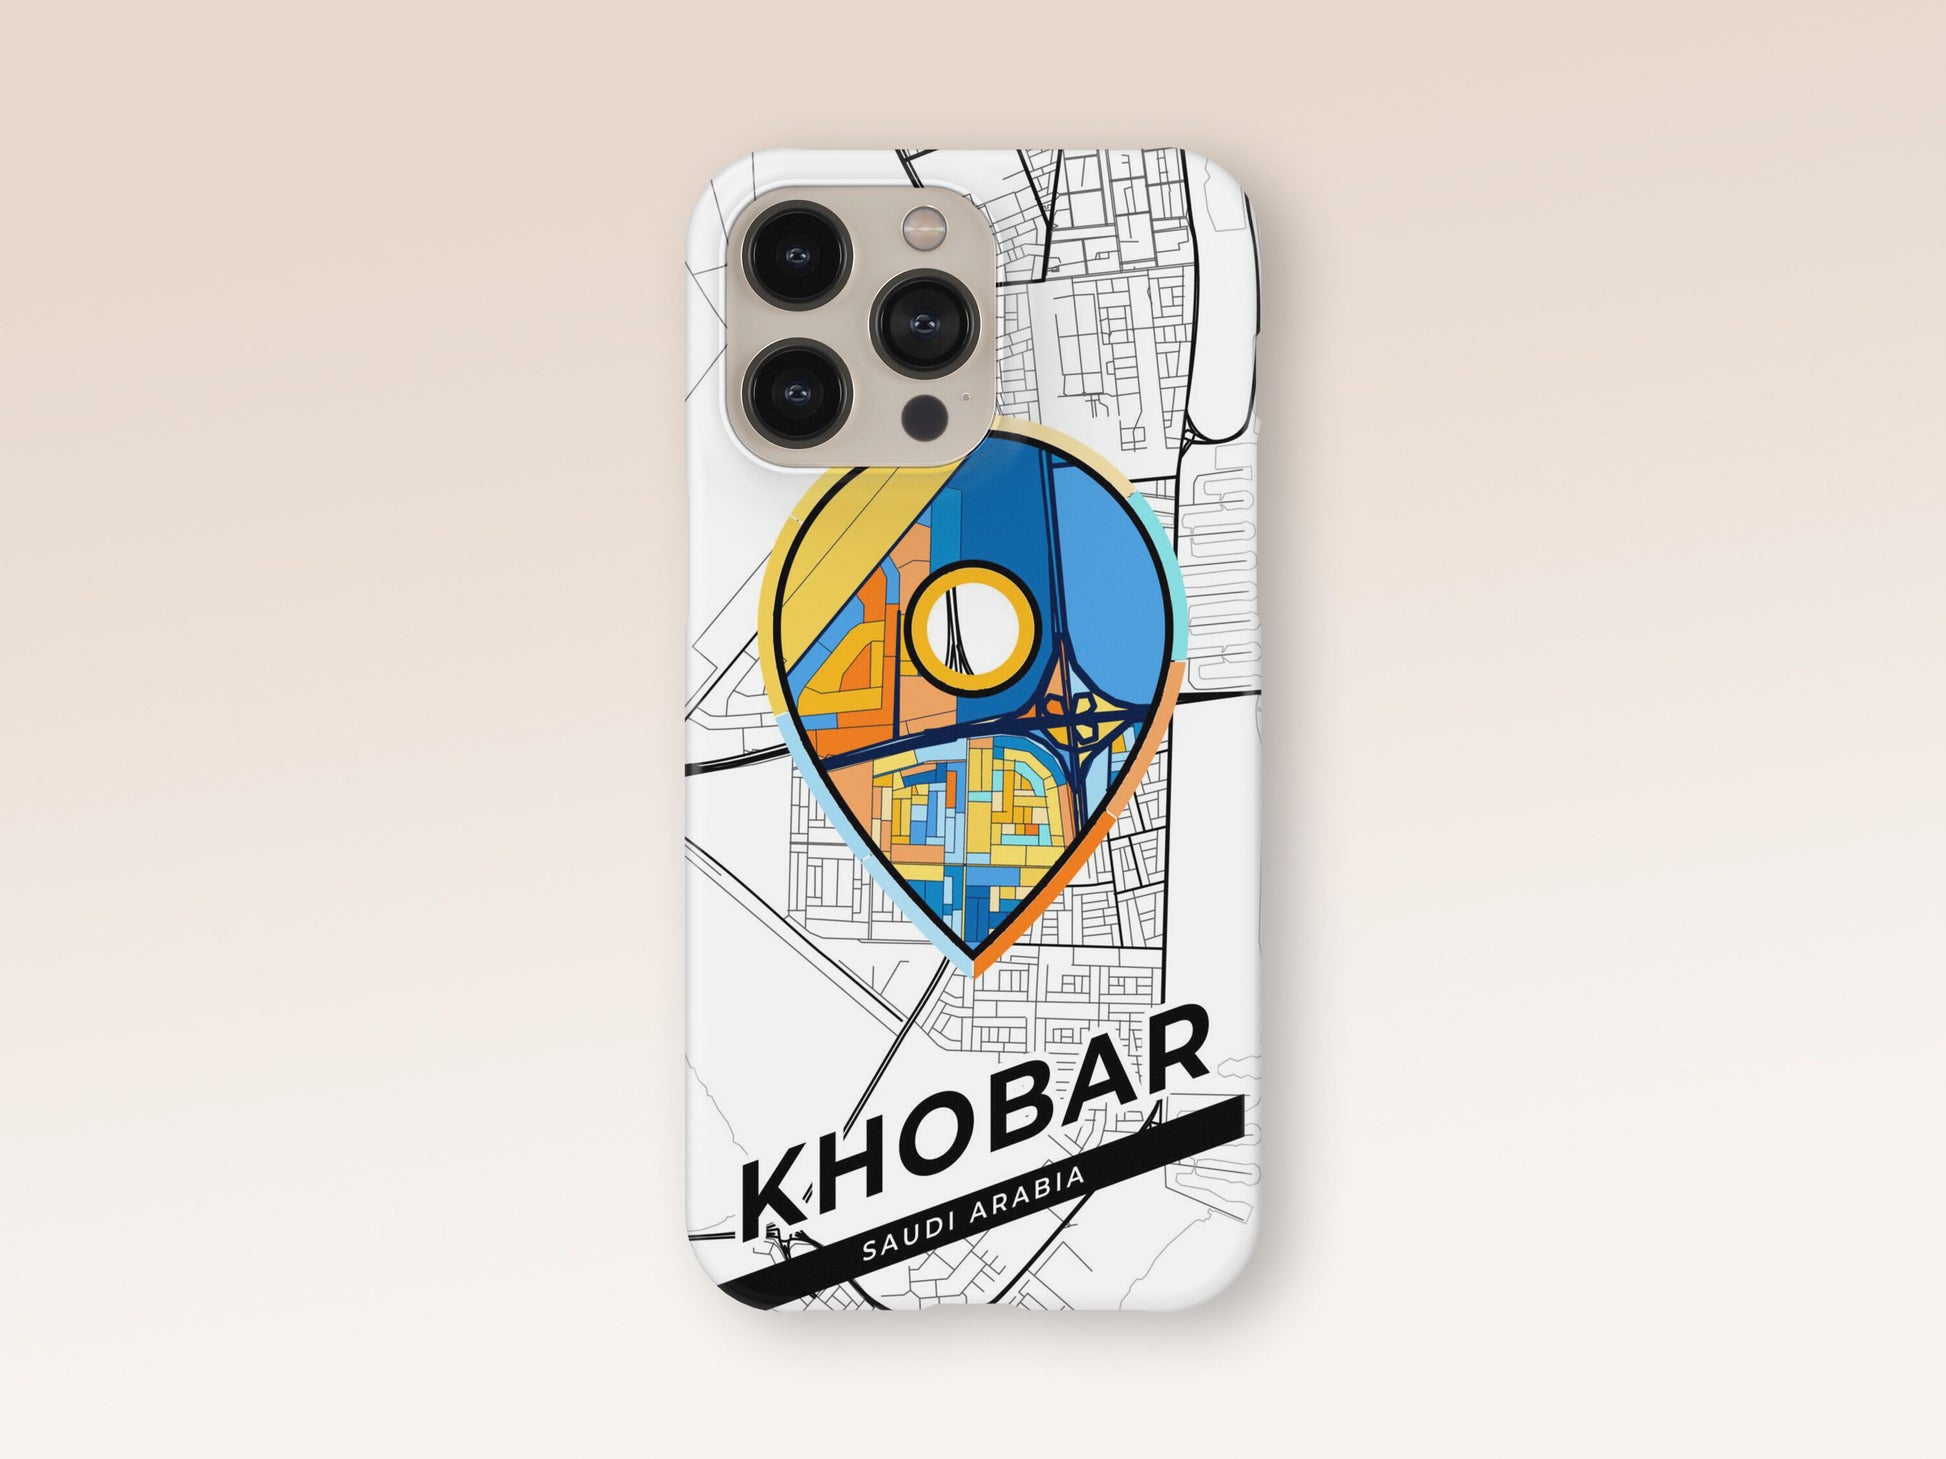 Khobar Saudi Arabia slim phone case with colorful icon. Birthday, wedding or housewarming gift. Couple match cases. 1